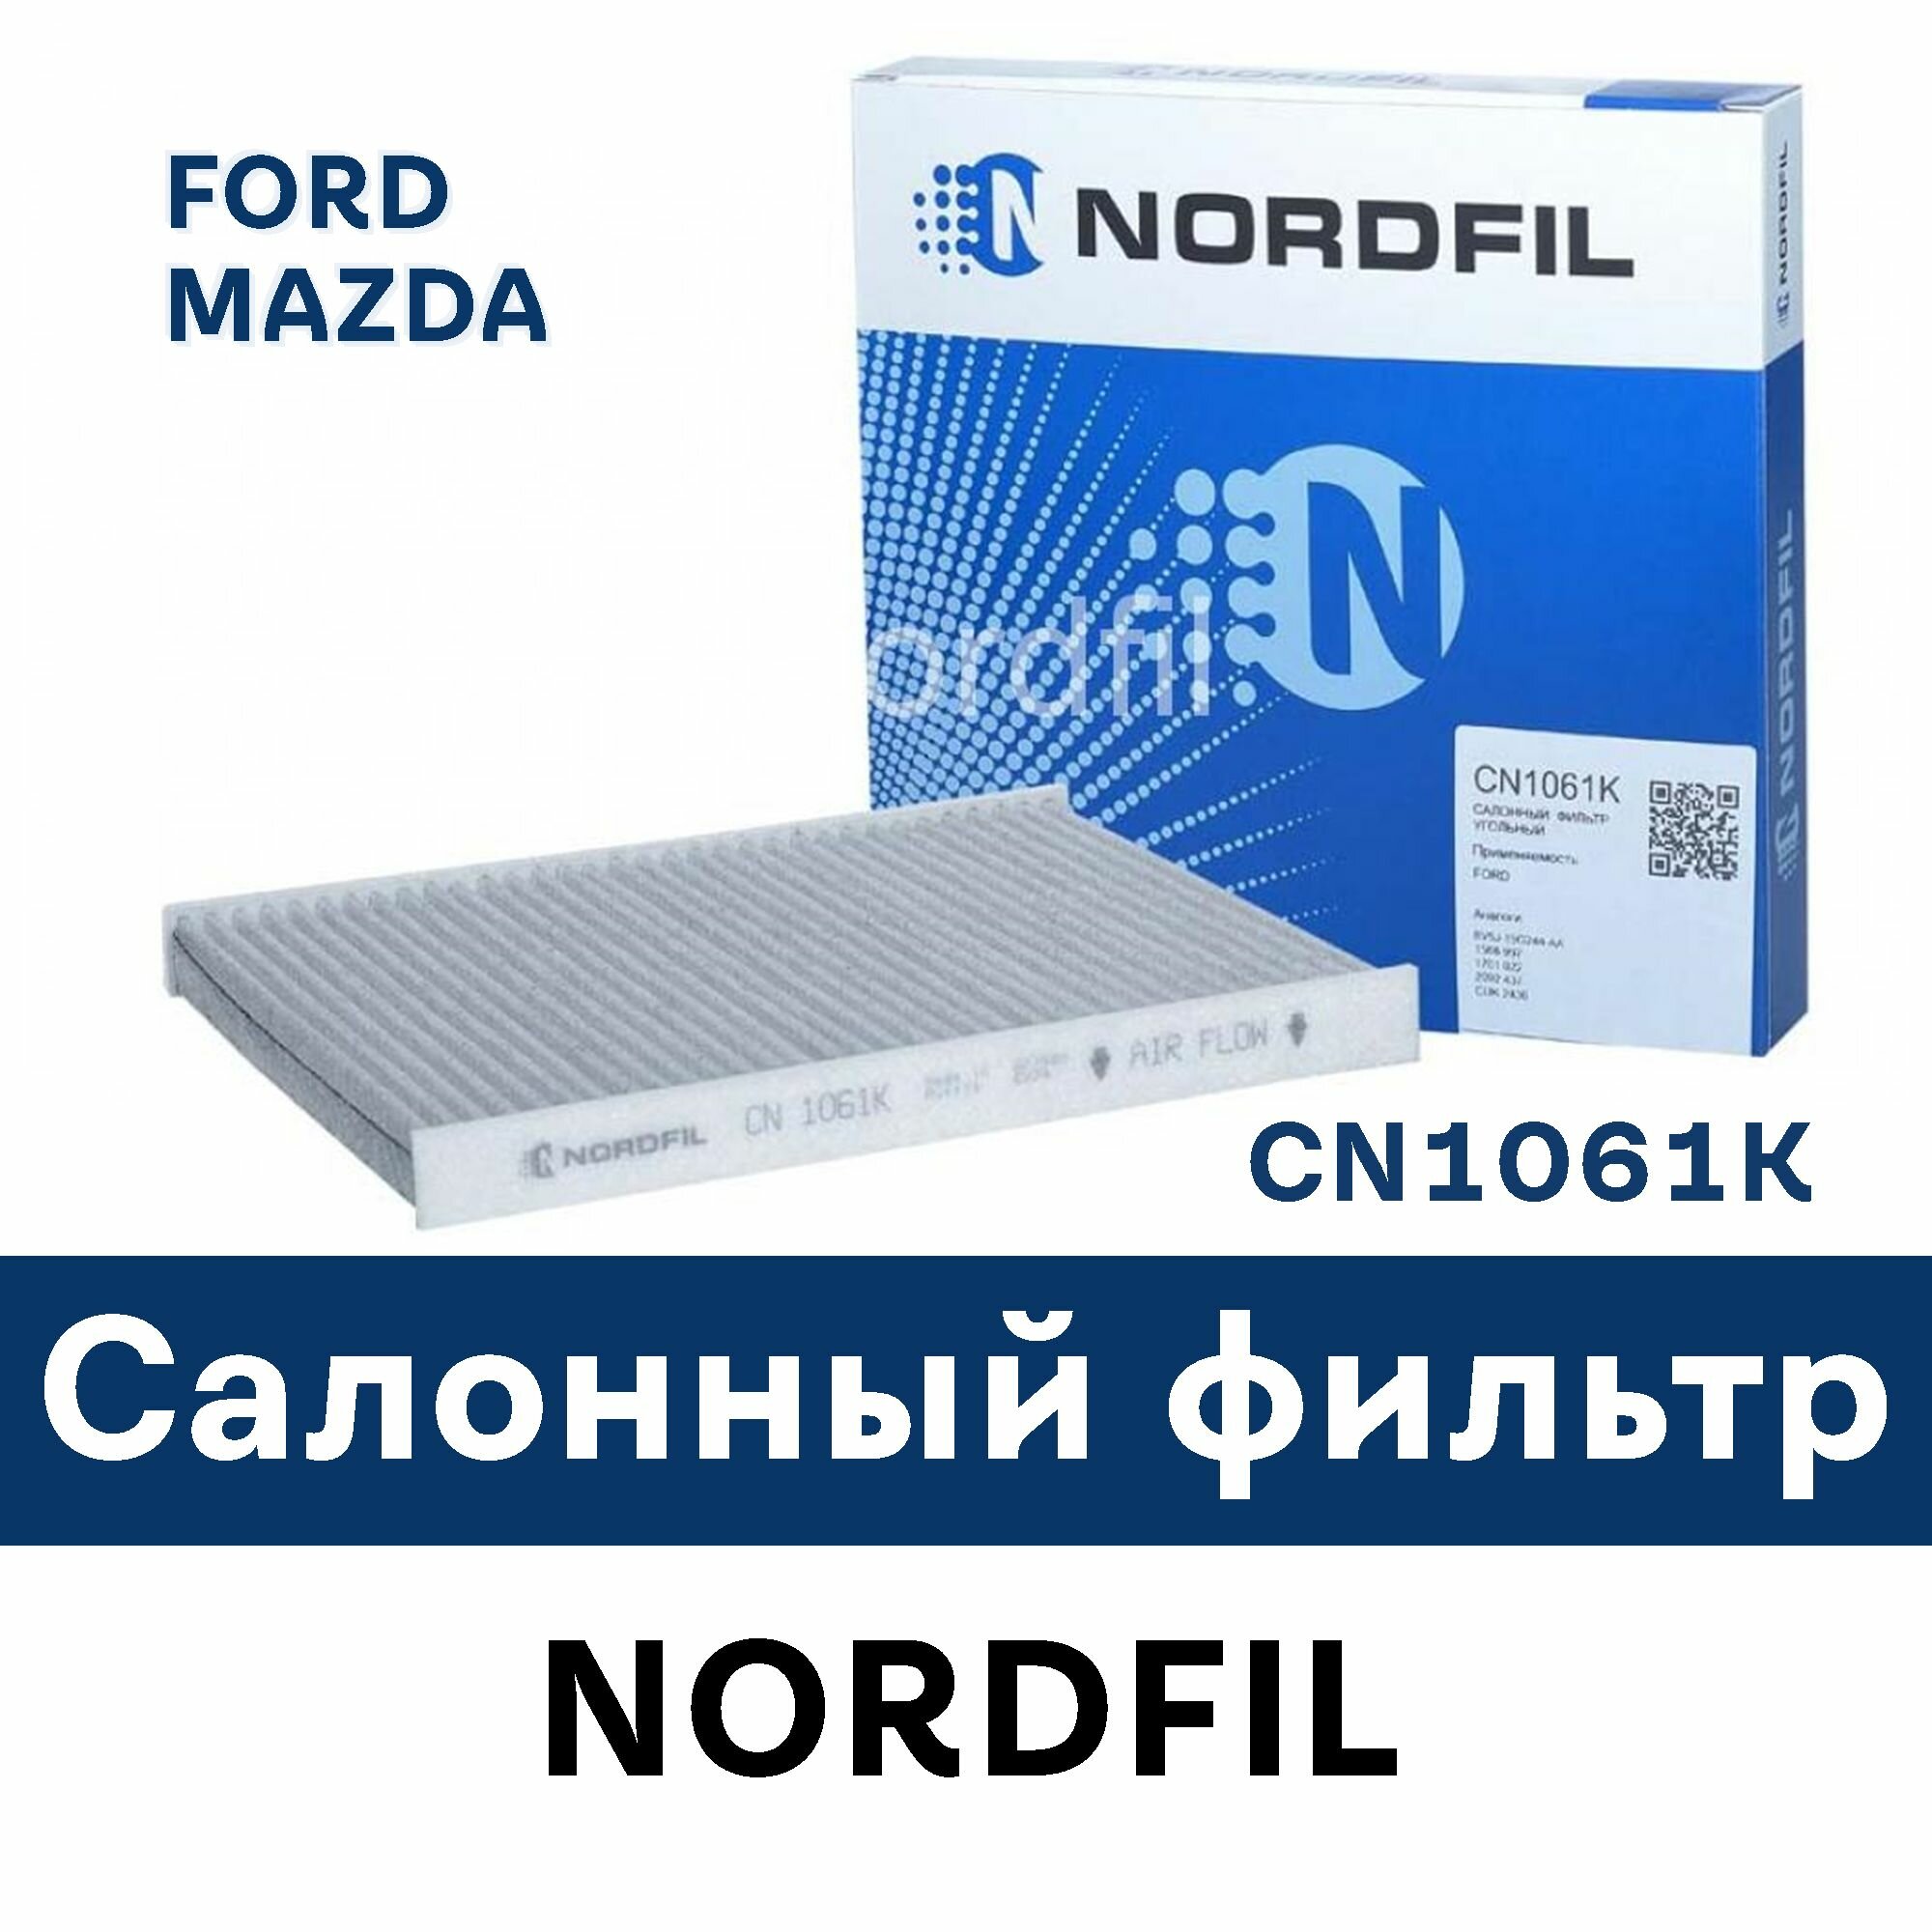 Салонный фильтр для FORD MAZDA CN1061K NORDFIL